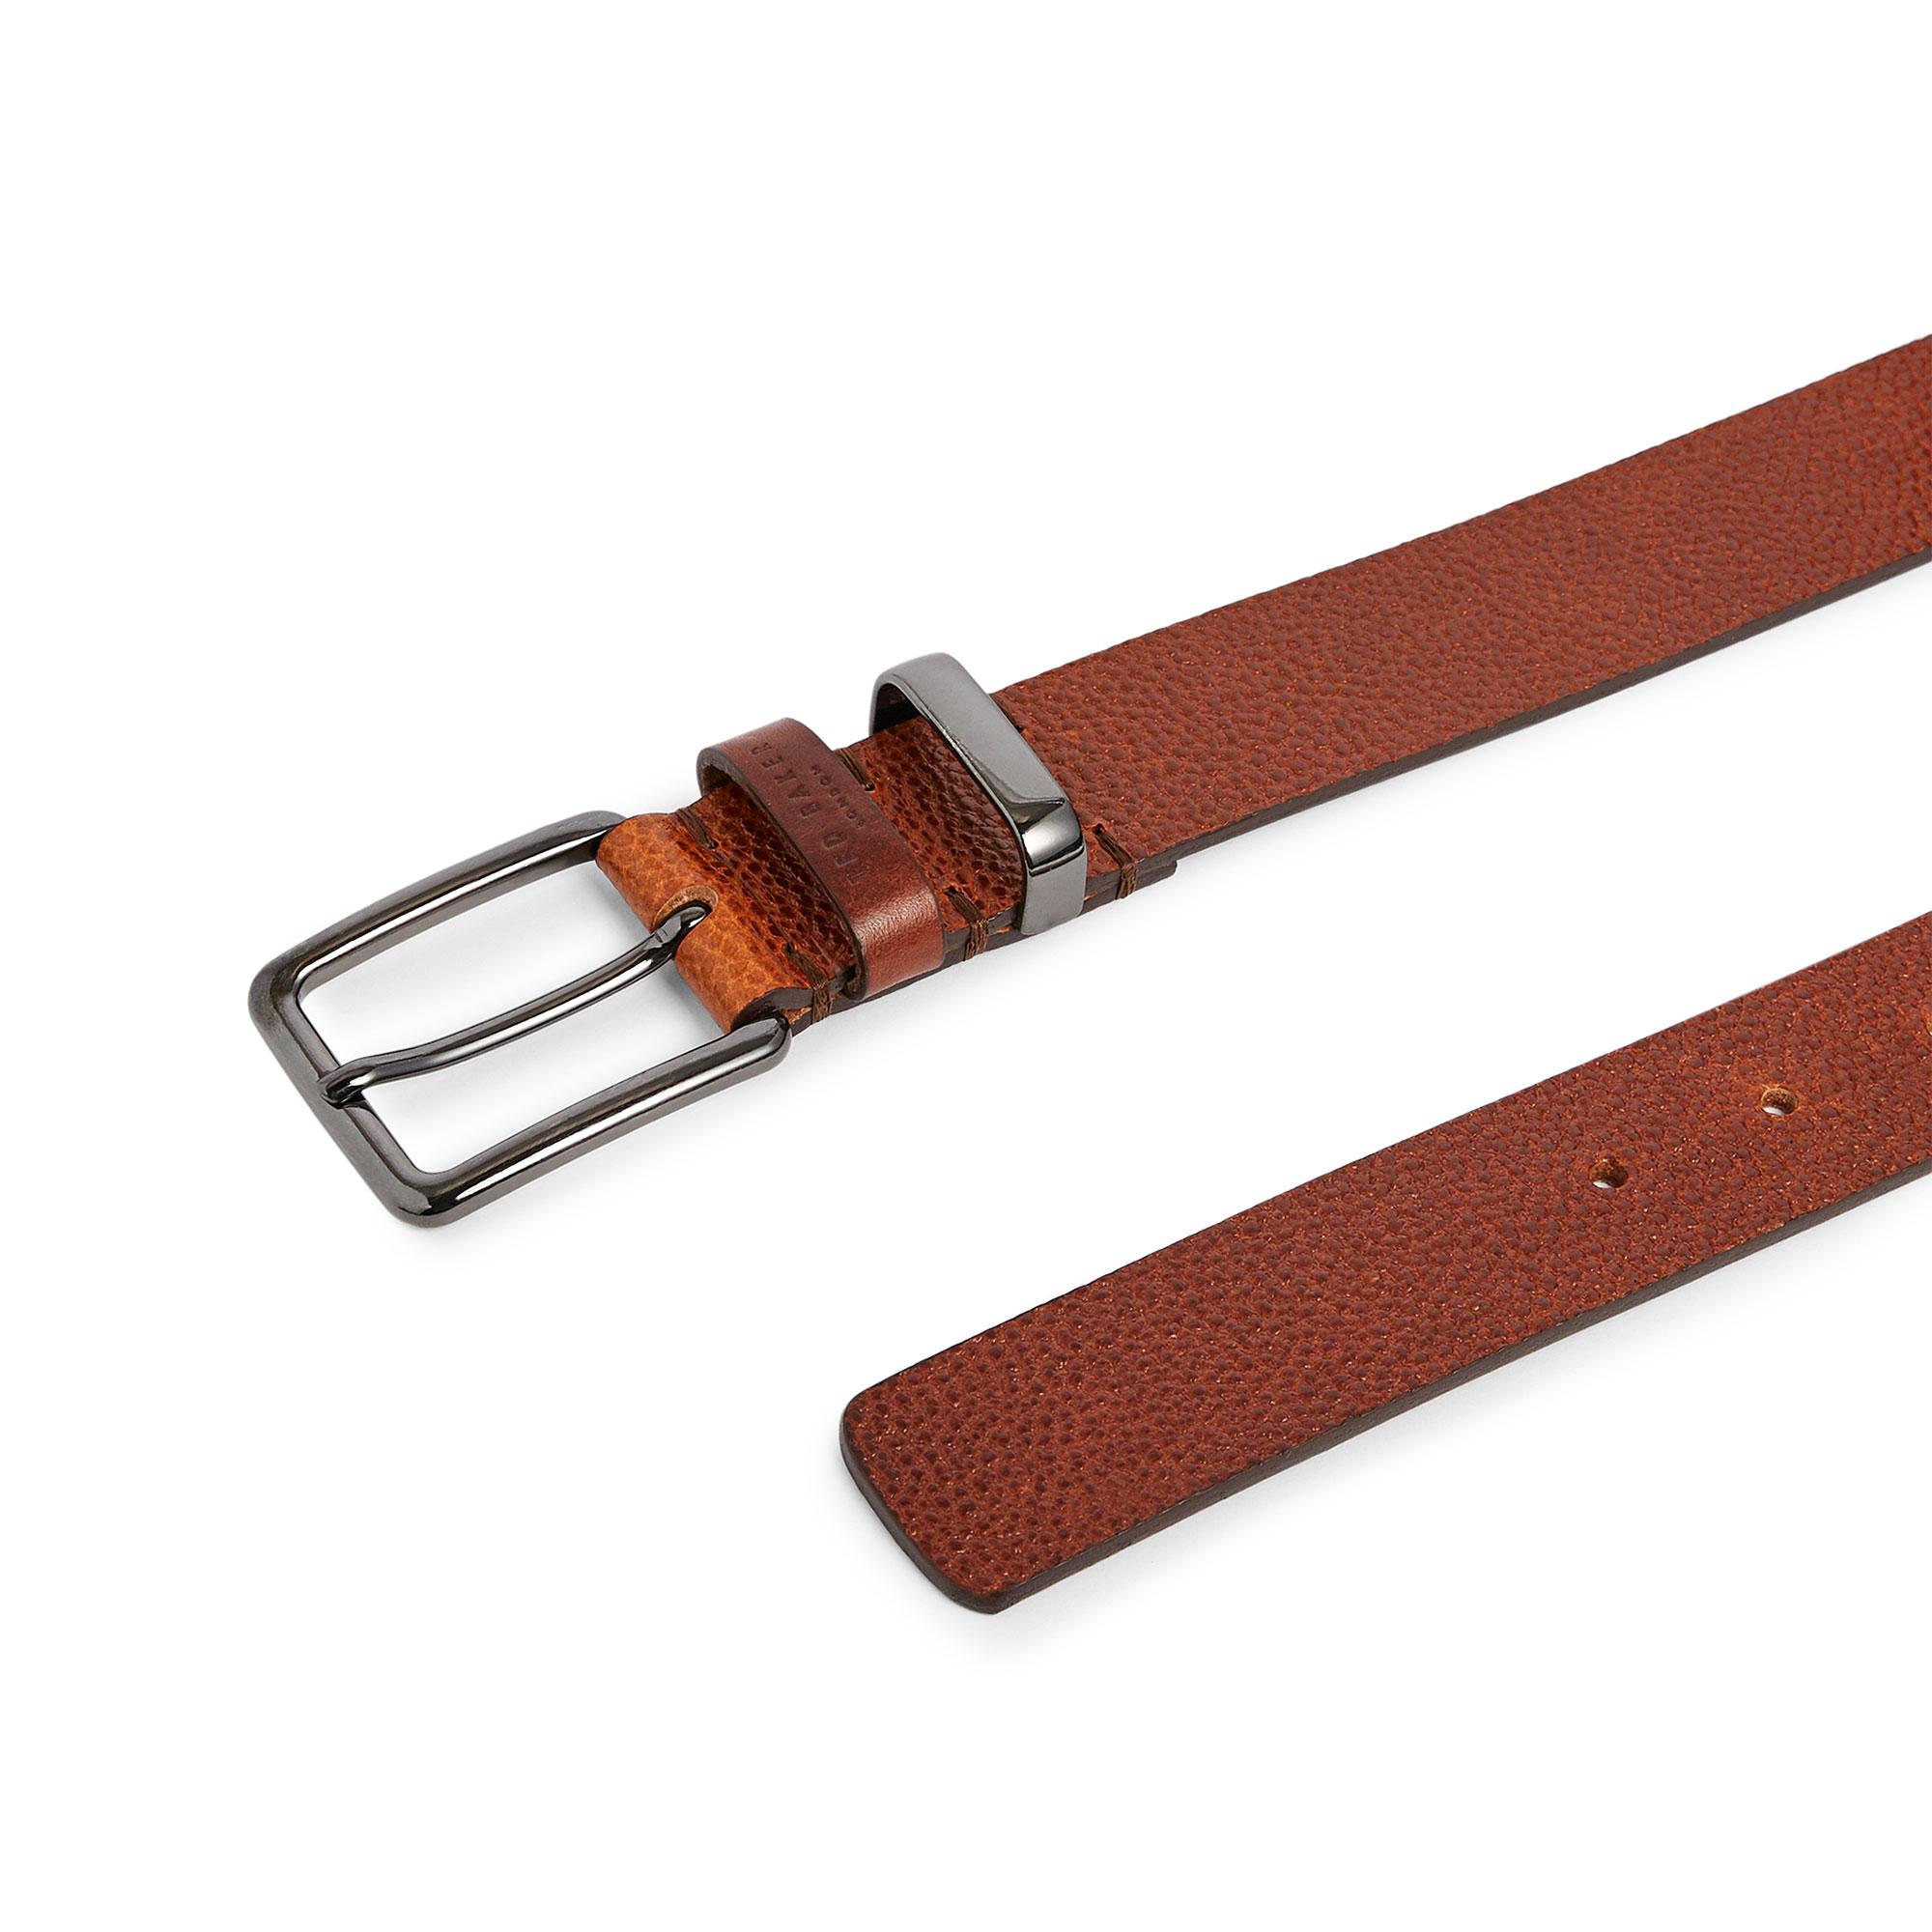 Miloner Leather Belt